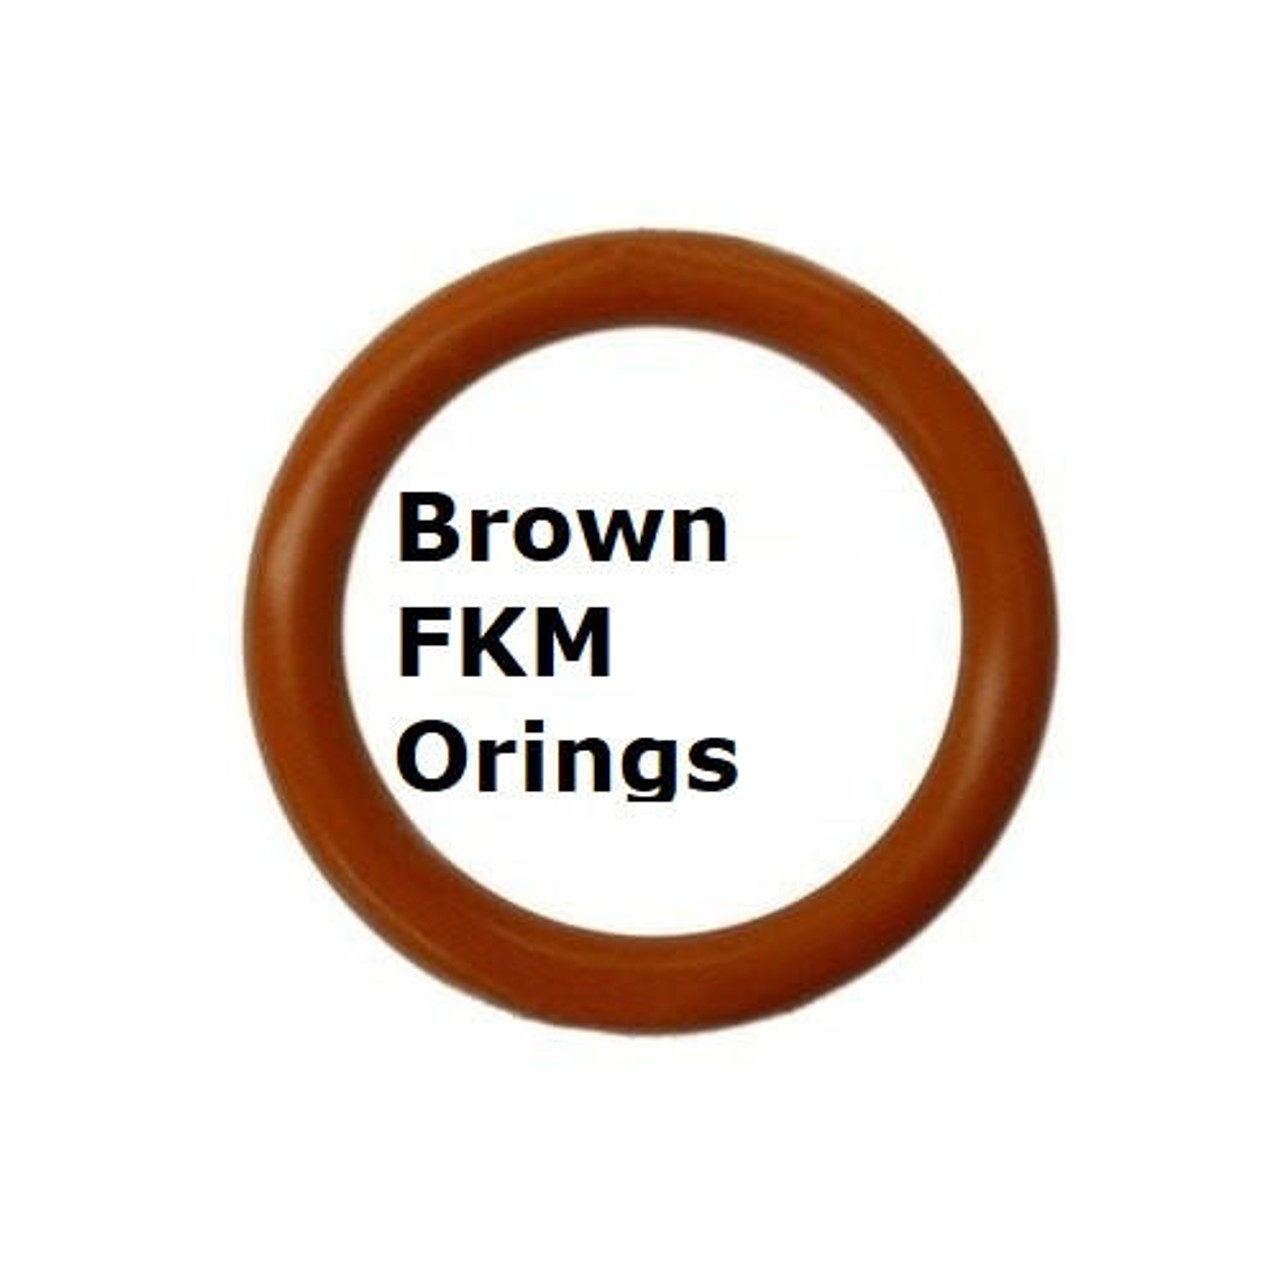 FKM Heat Resistant Brown O-rings  Size 313    Minimum 2 pcs